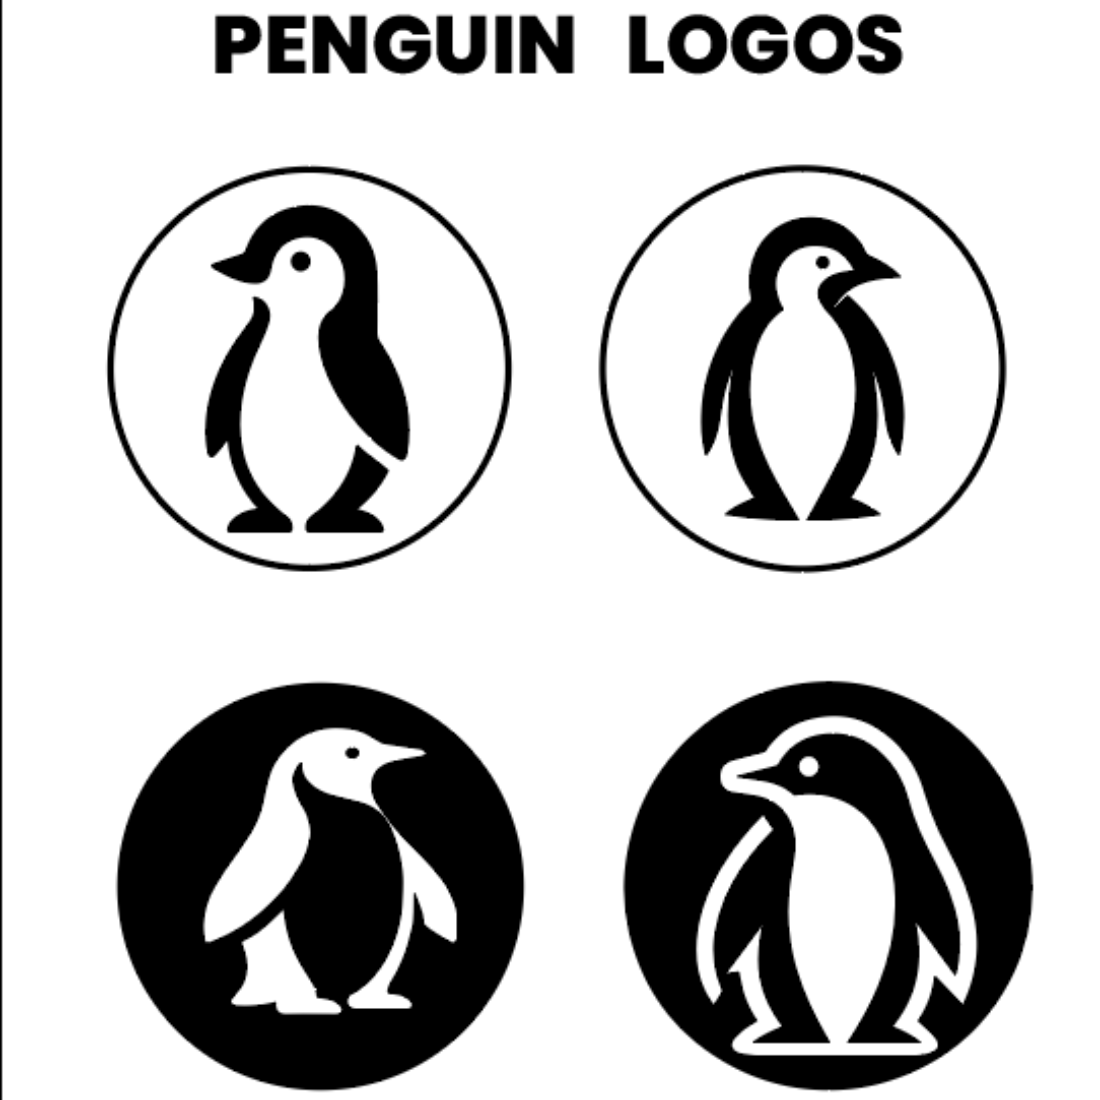 penguin logos cover image.